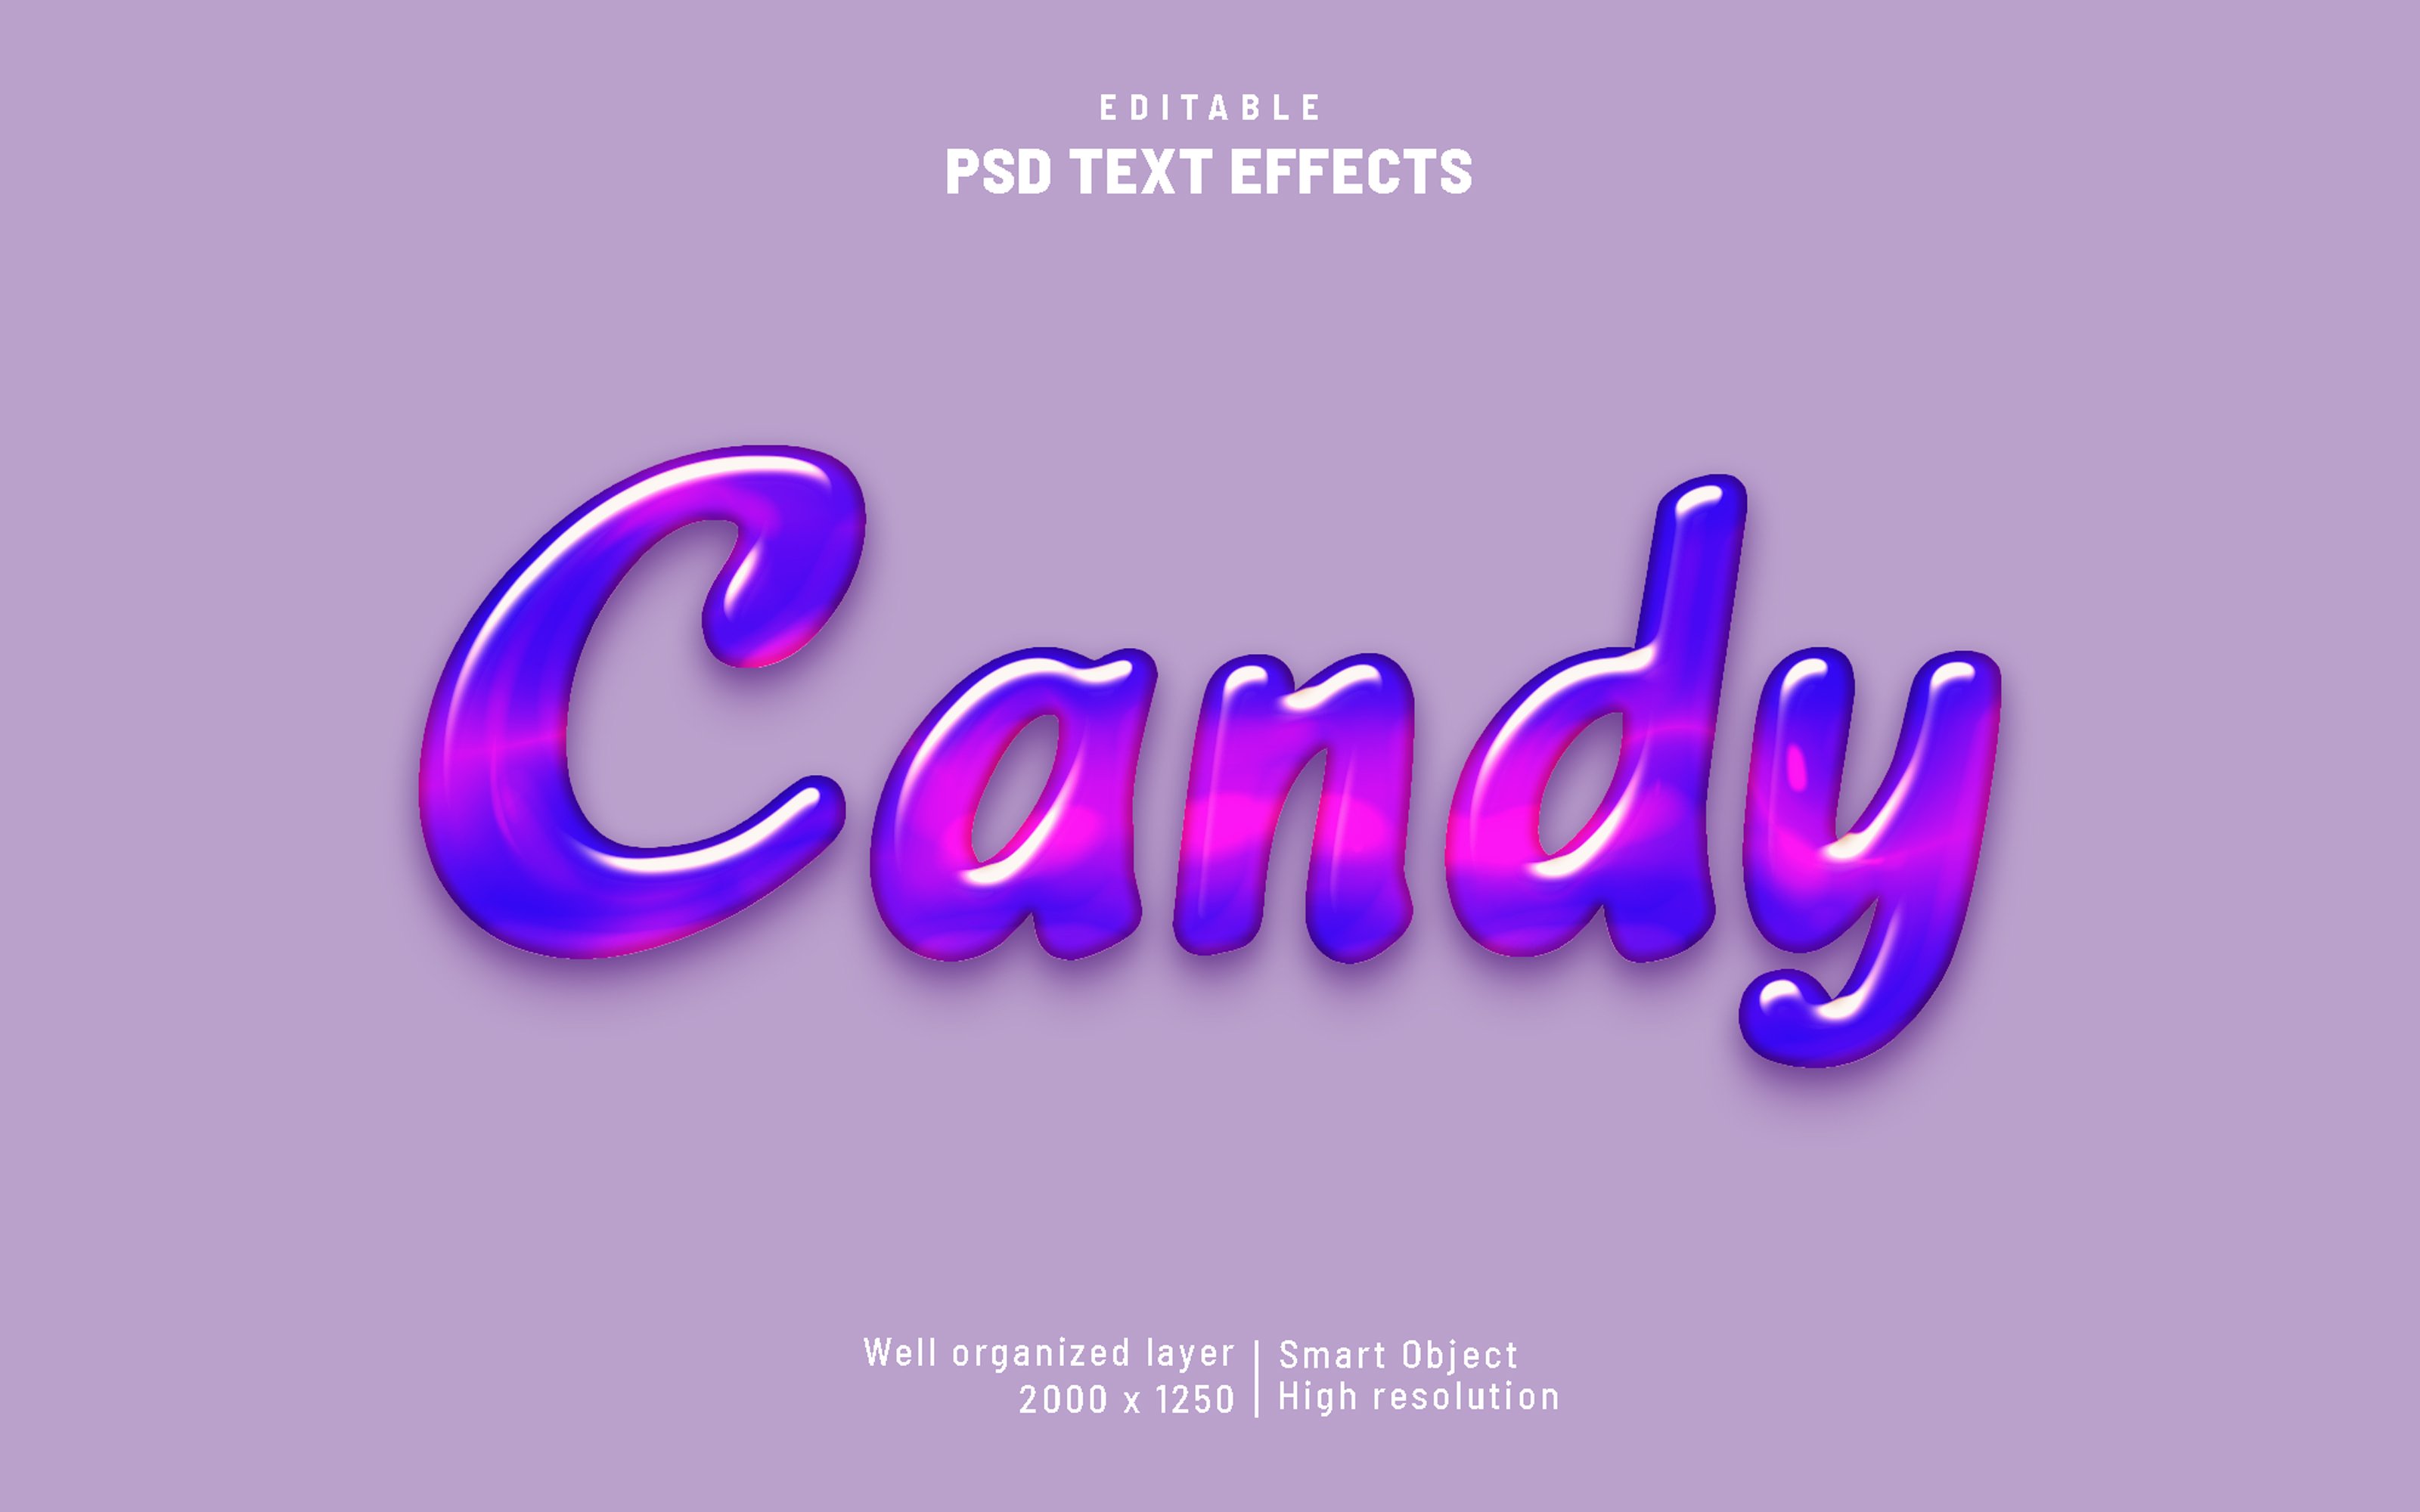 Candy liquid editable text Psd Stylecover image.